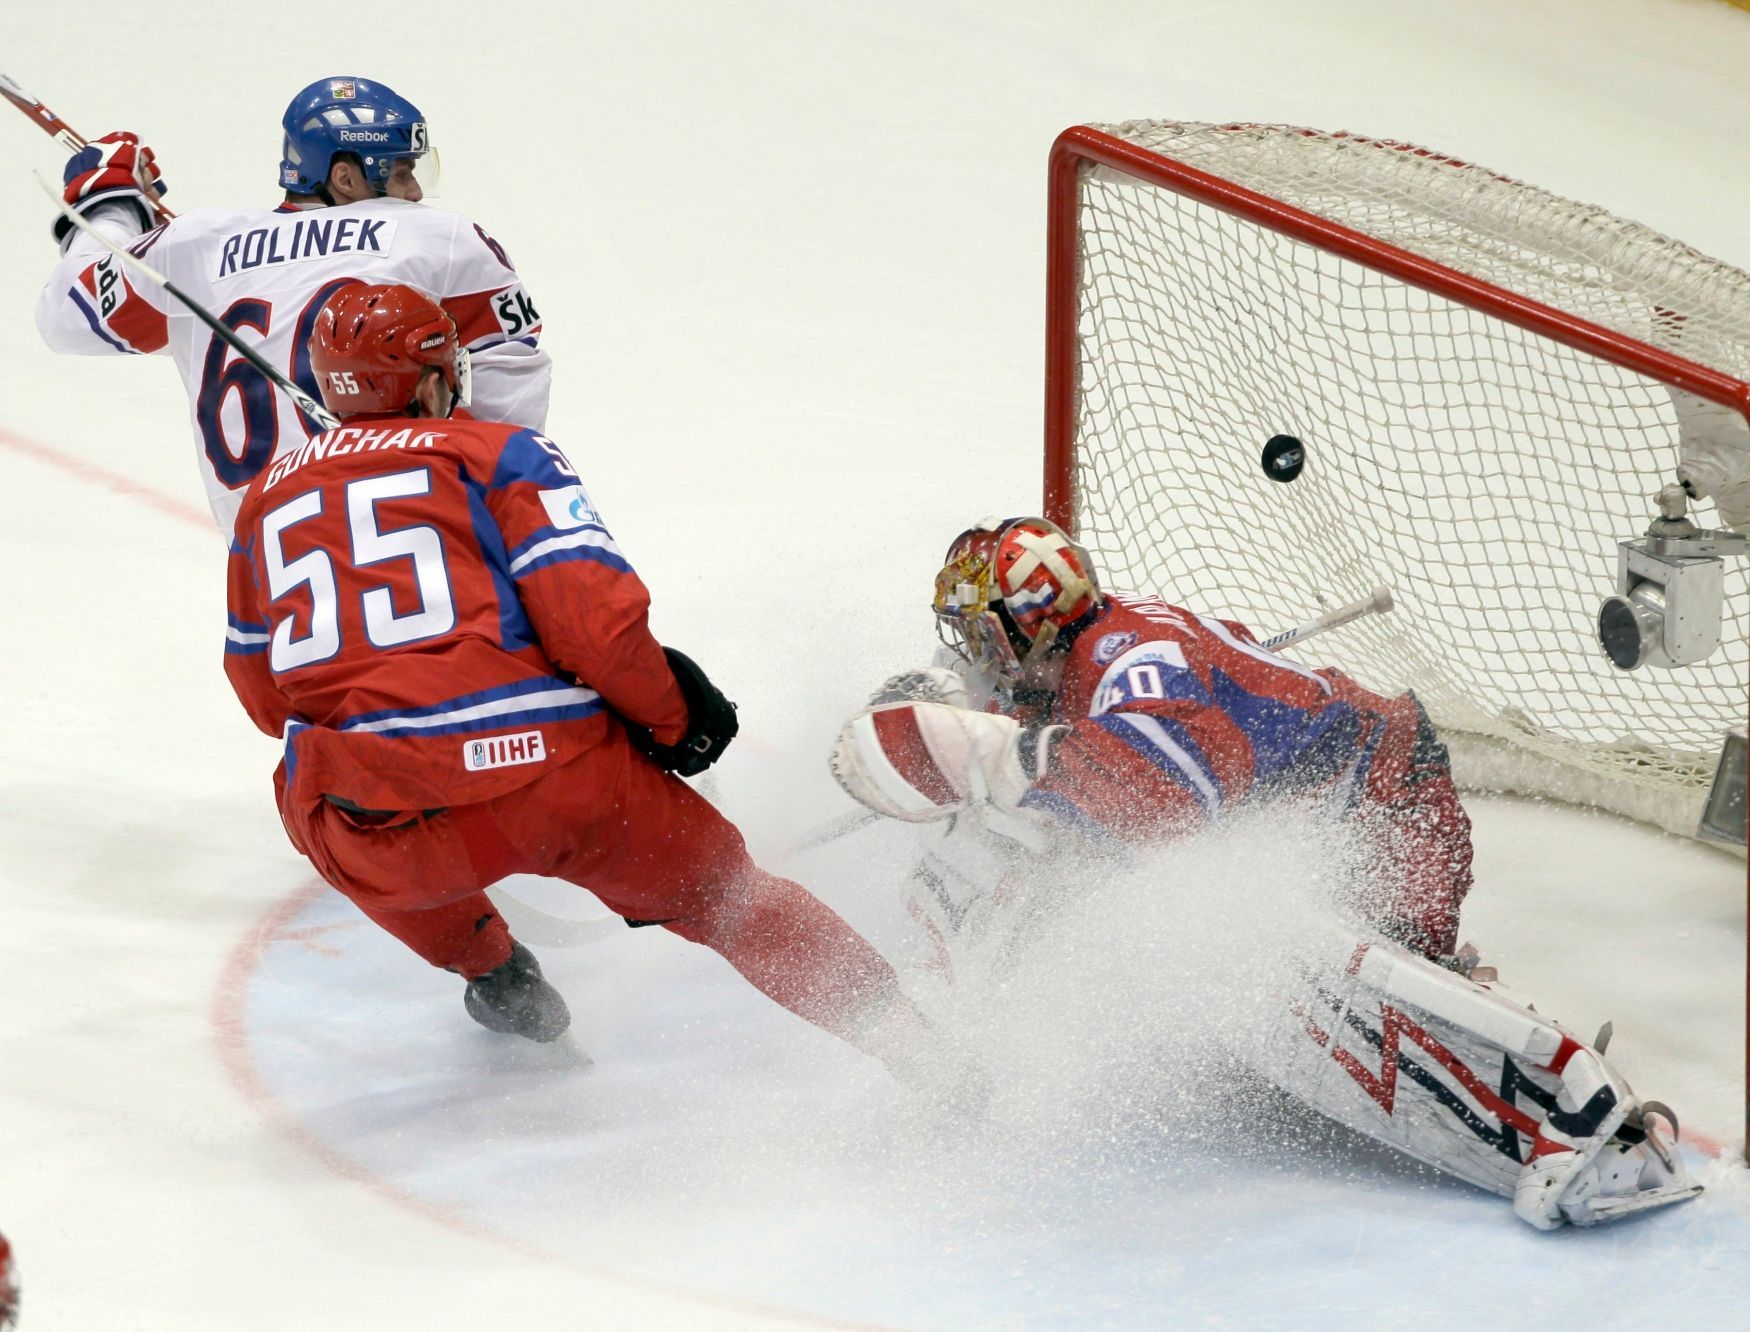 Finále MS 2010 v hokeji, Česko - Rusko: Tomáš Rolinek dává gól na 2:0